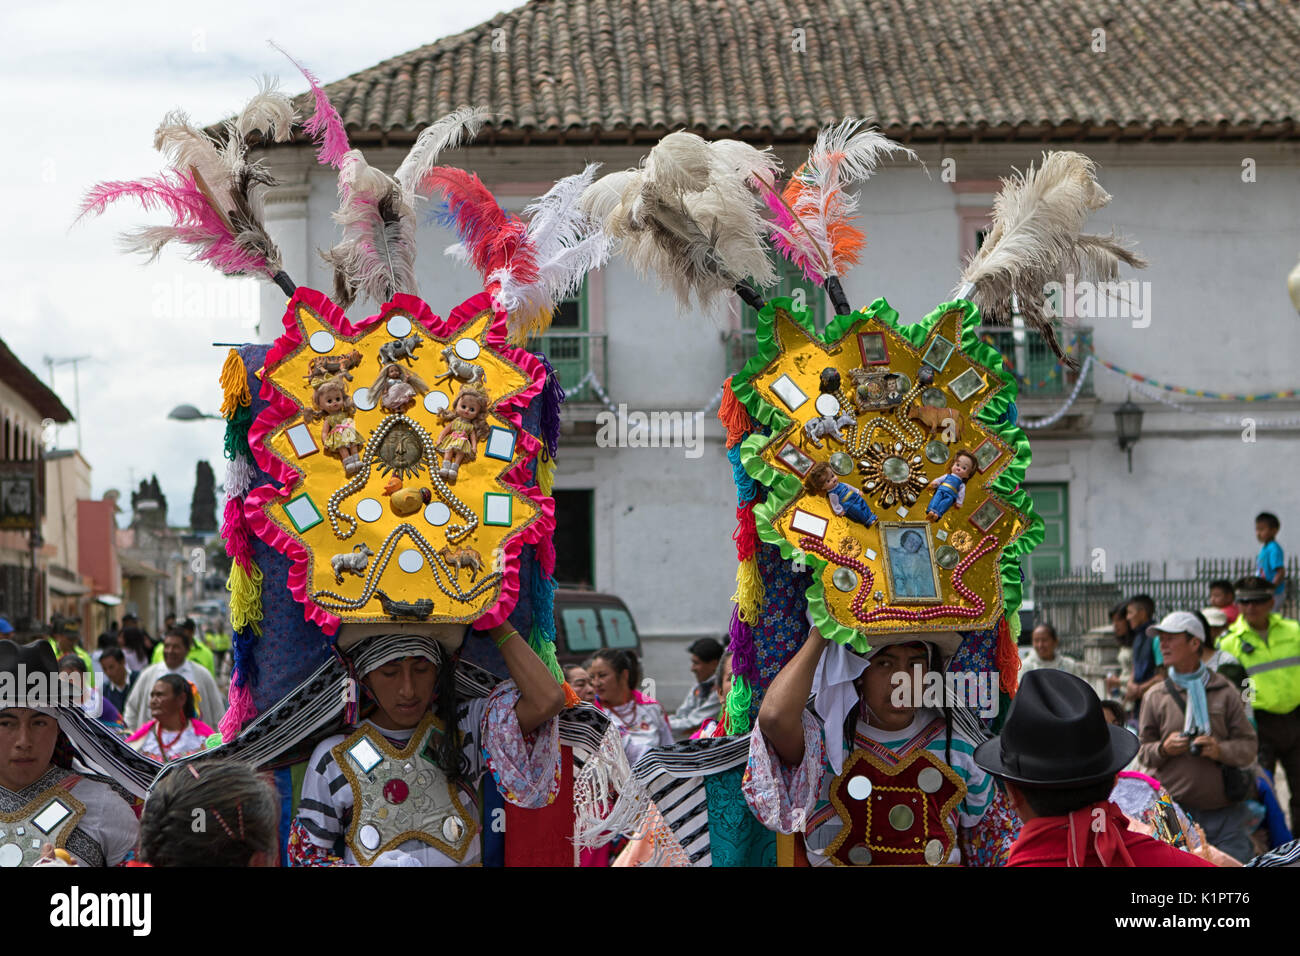 June 18, 2017 Pujili, Ecuador: indigenous kichwa men in colourful costume balancing a large display on his head at Corpus Christi parade Stock Photo